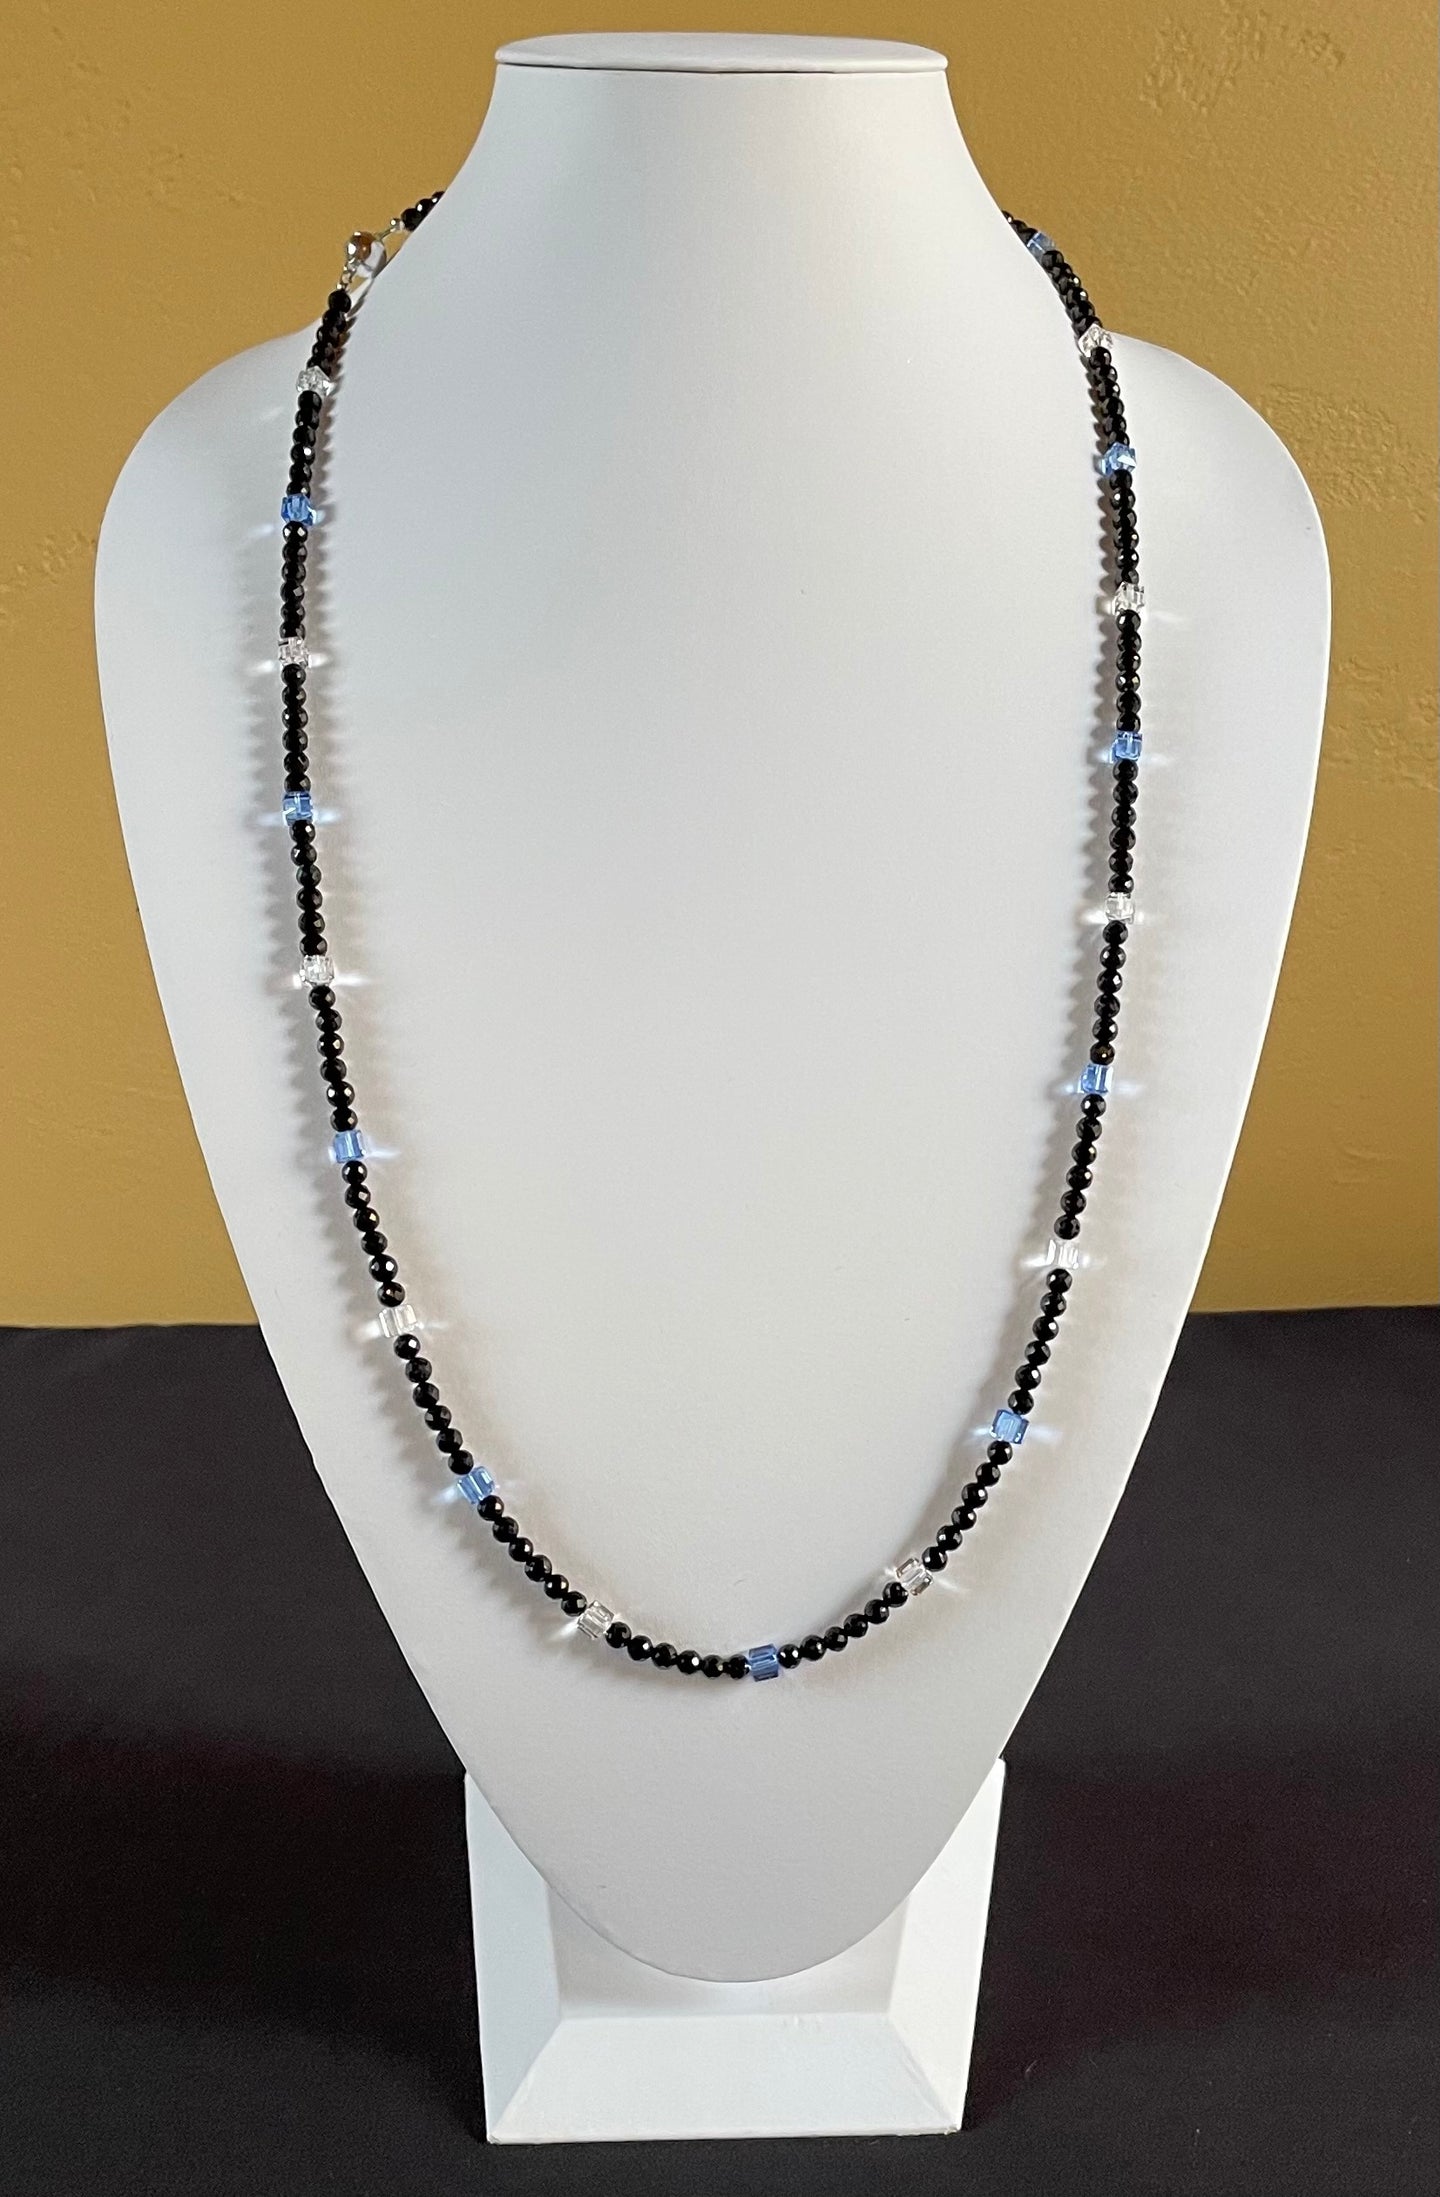 Necklace - Long faceted black spinel and Swarovski crystals